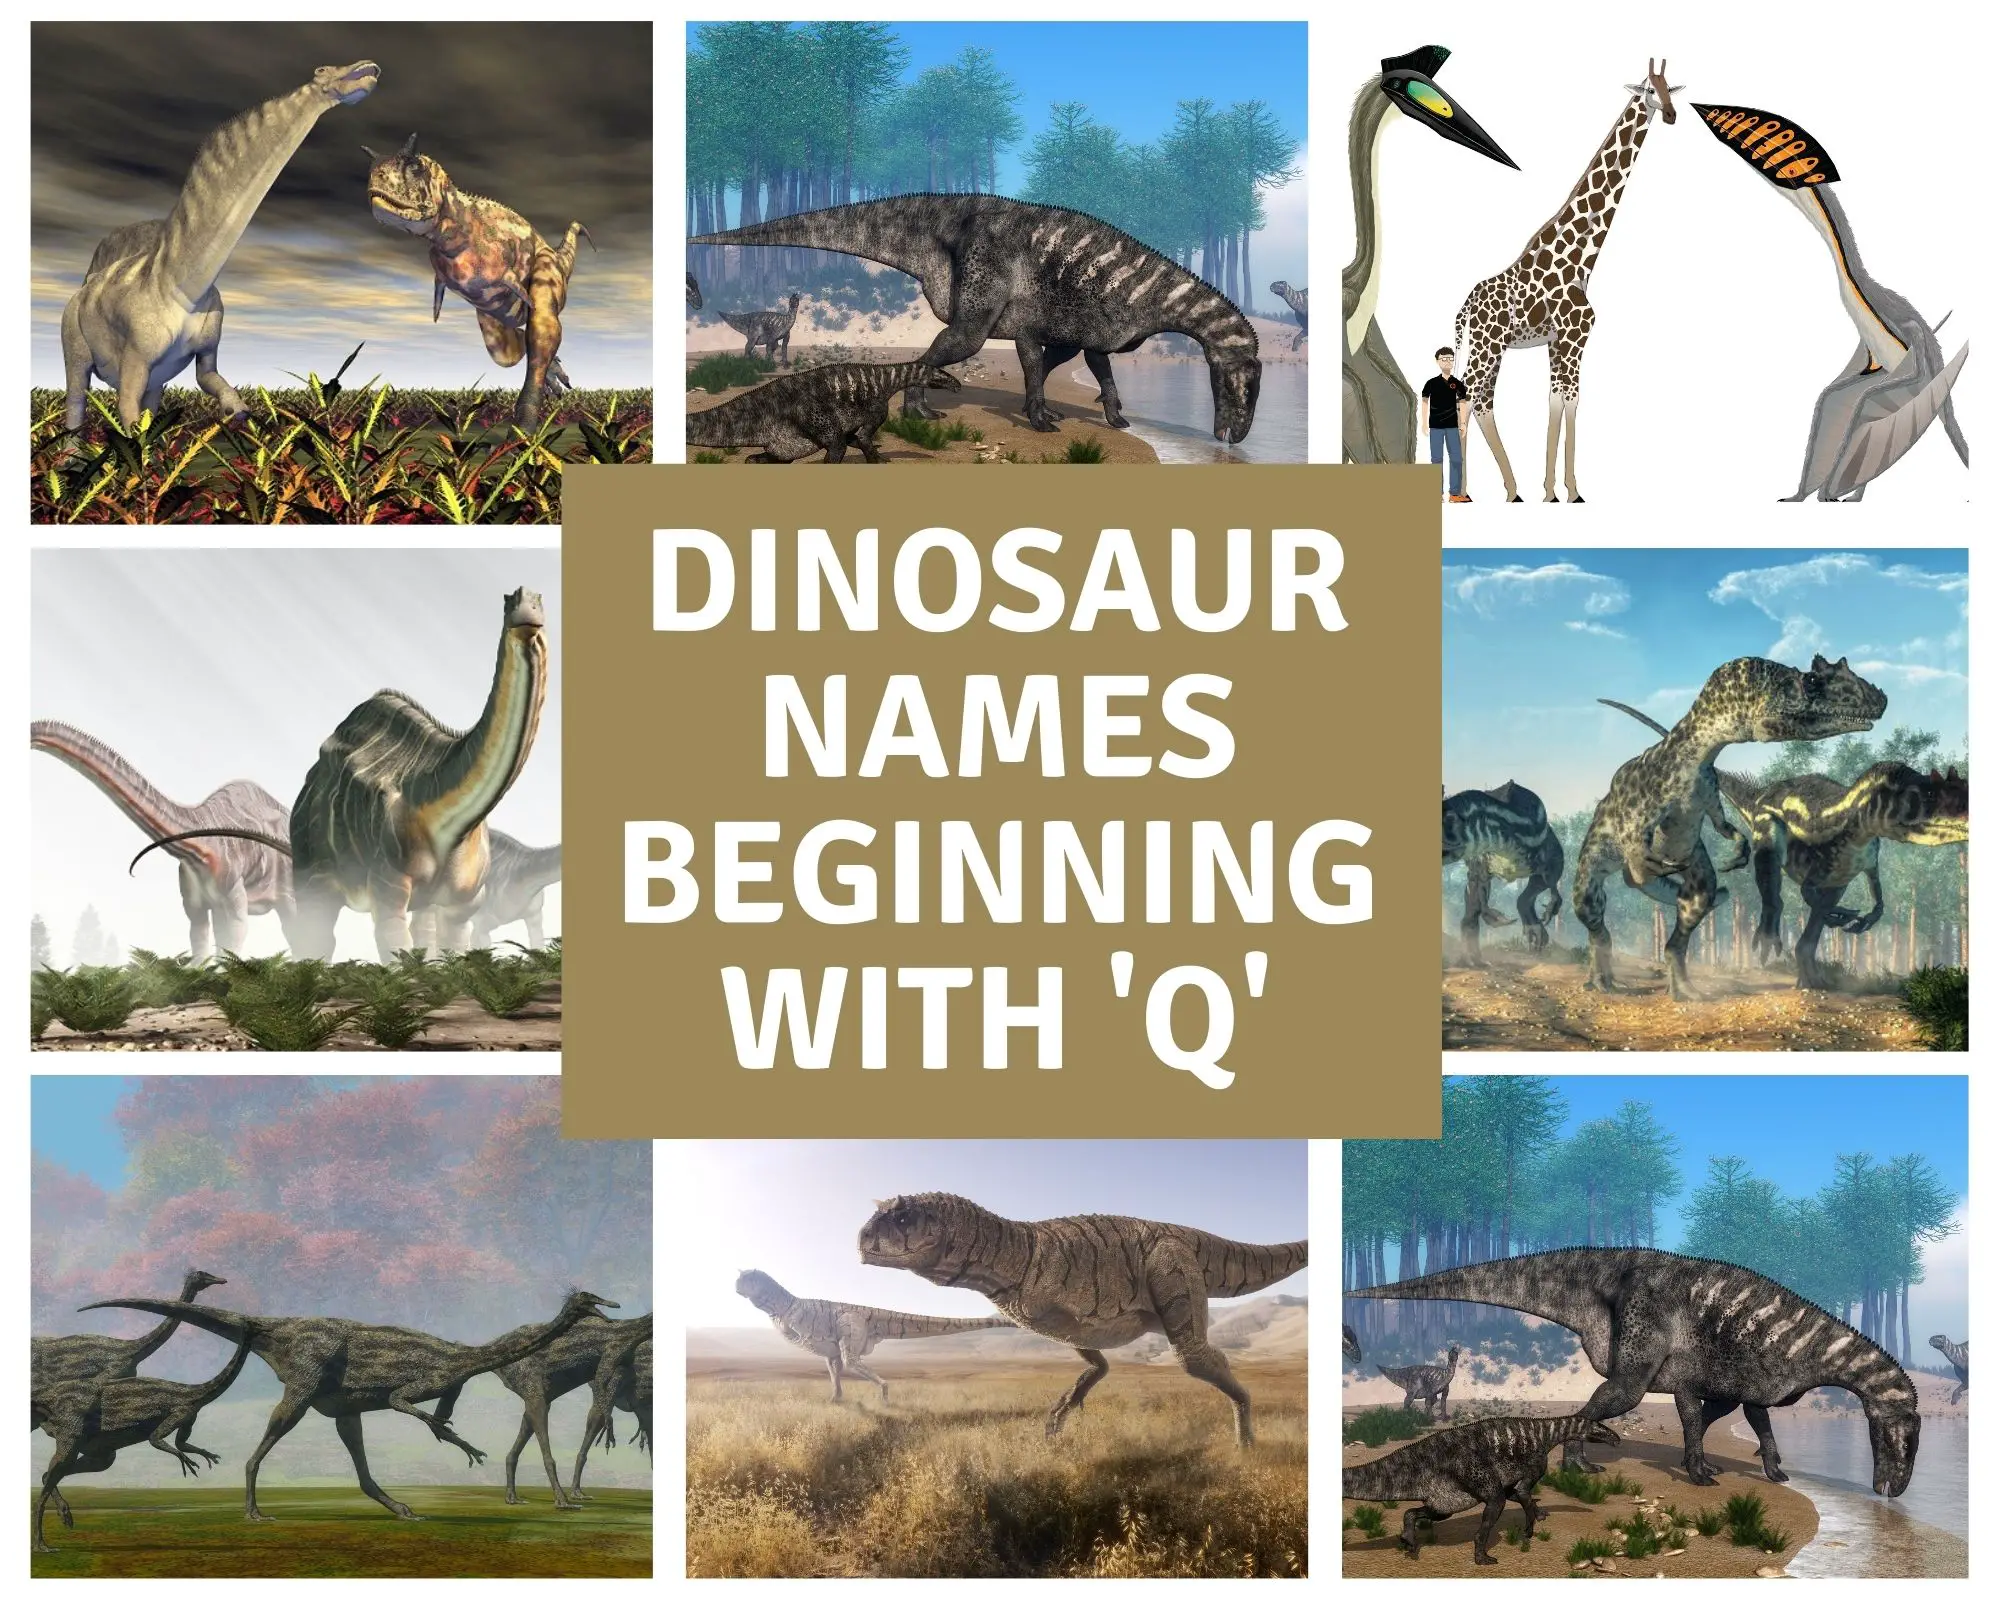 Dinosaur names beginning with Q